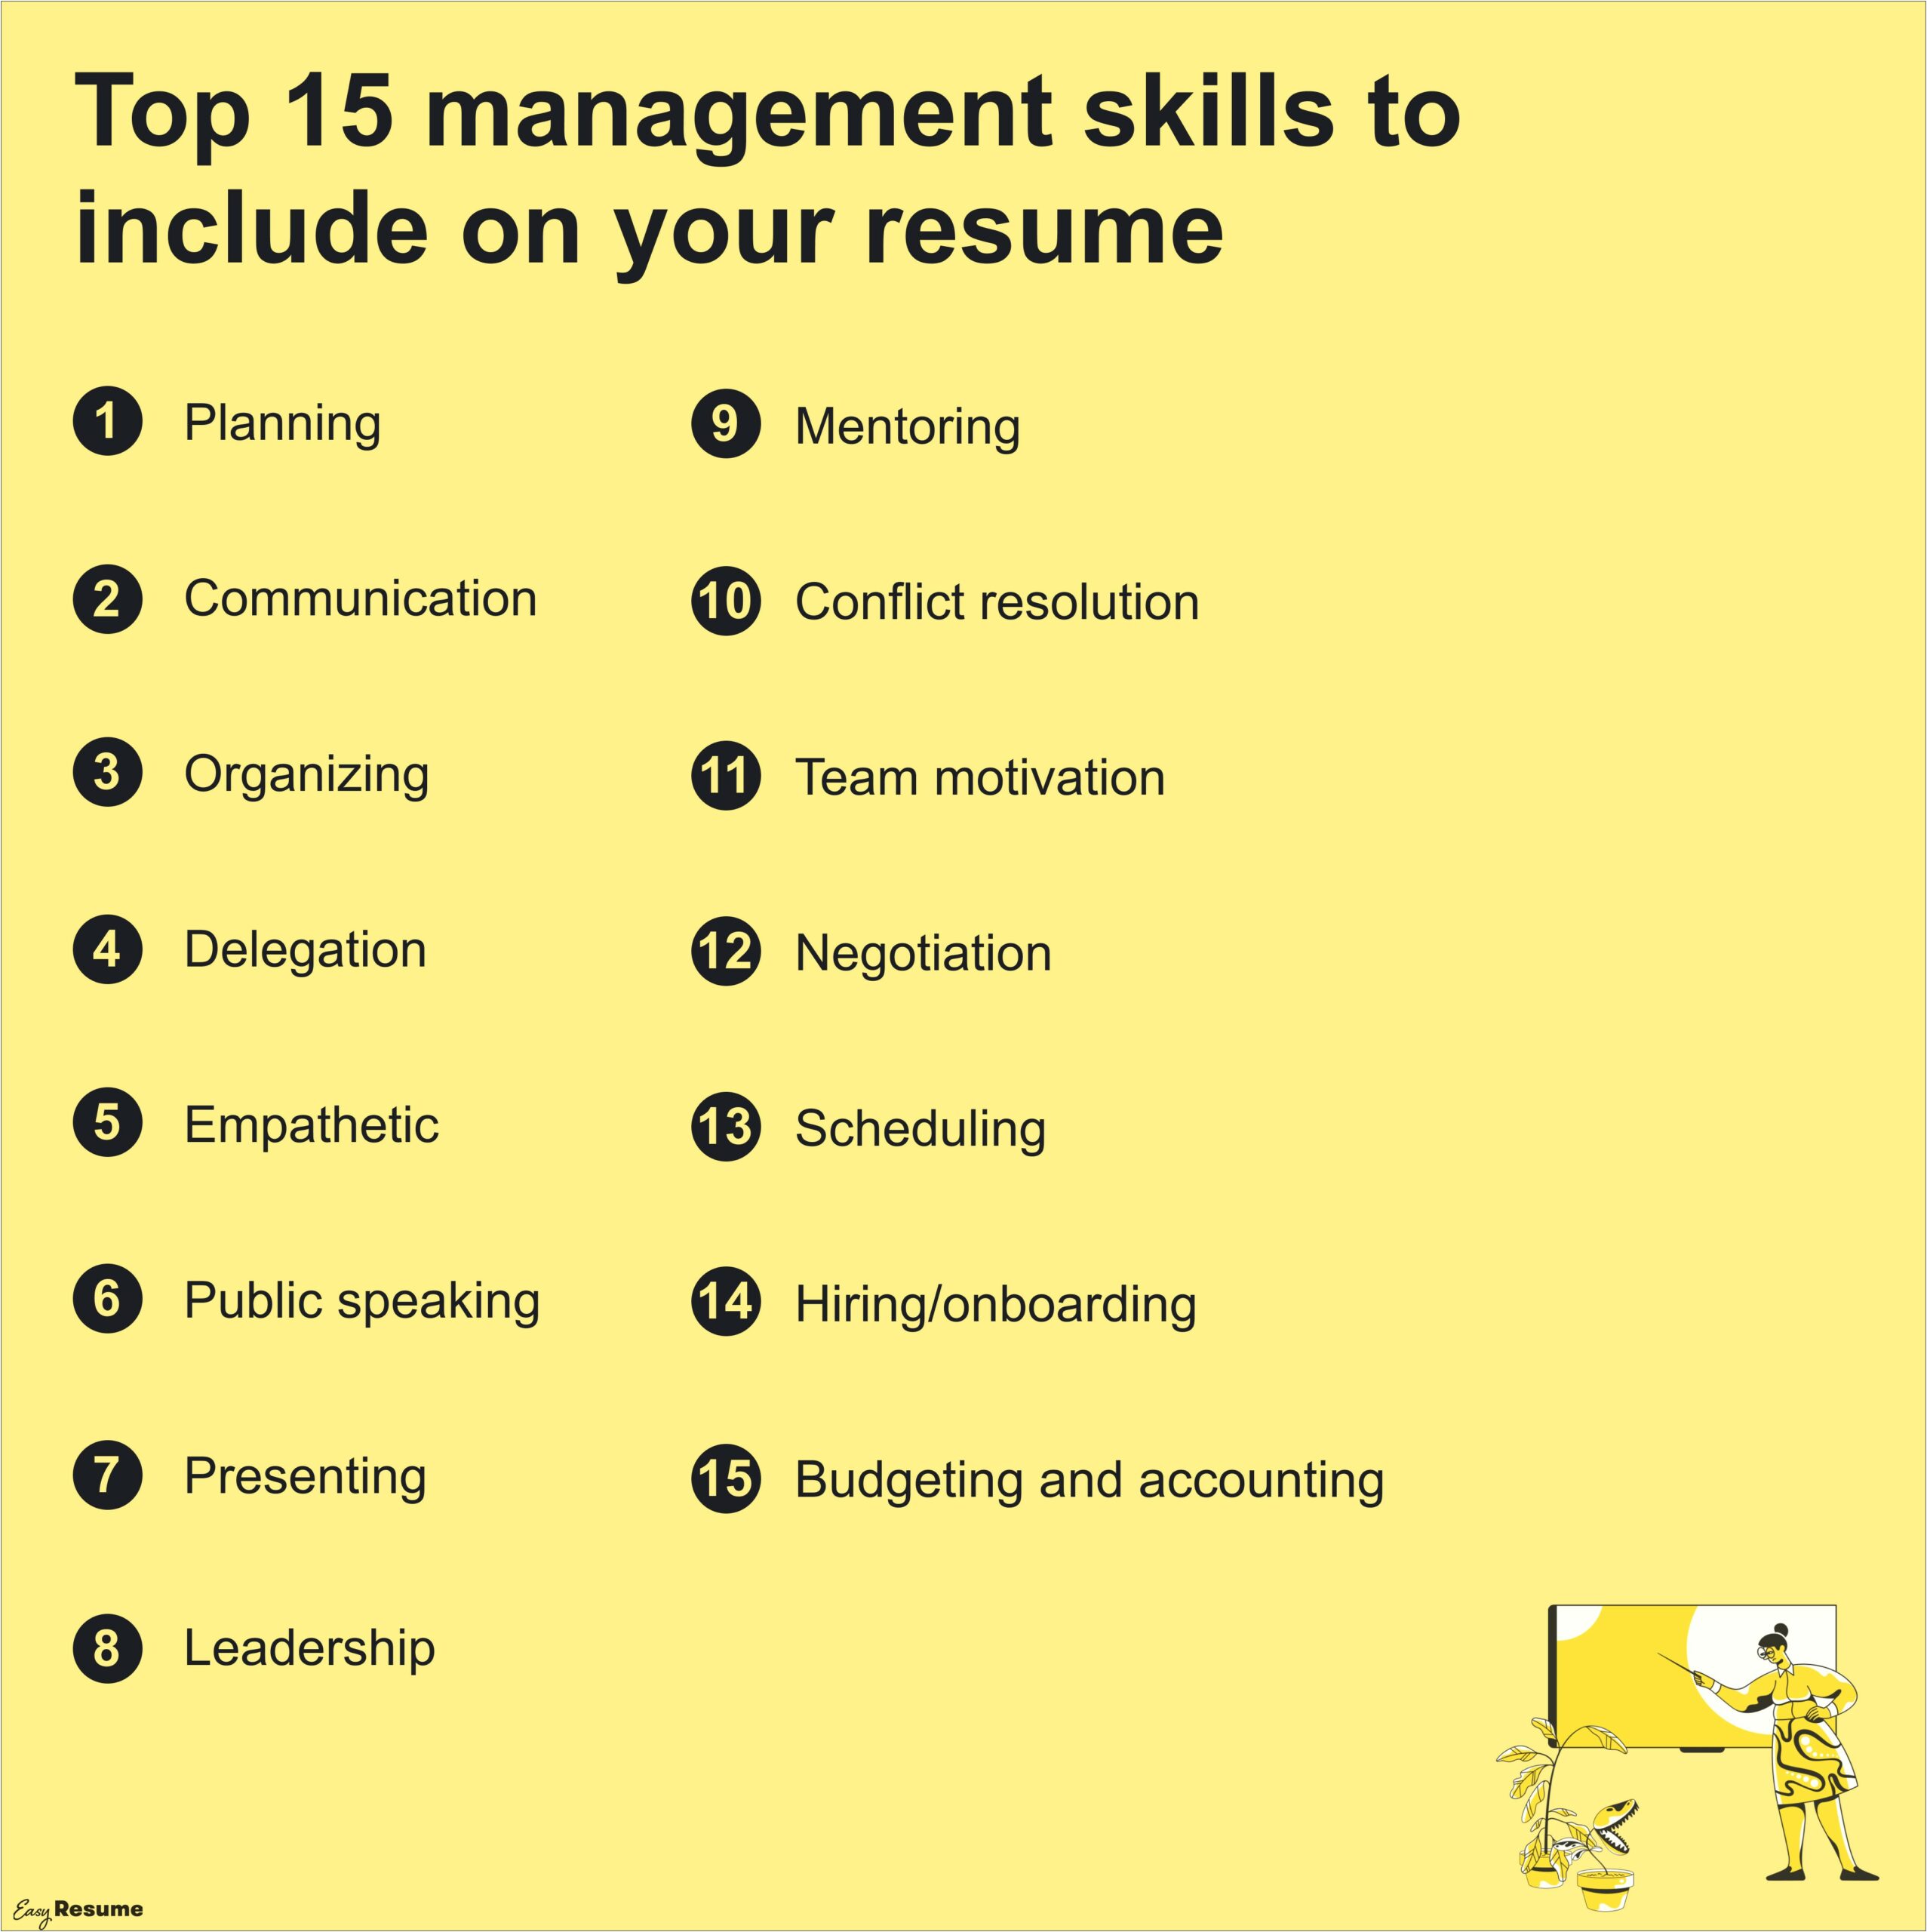 Top 10 Management Skills For Resume